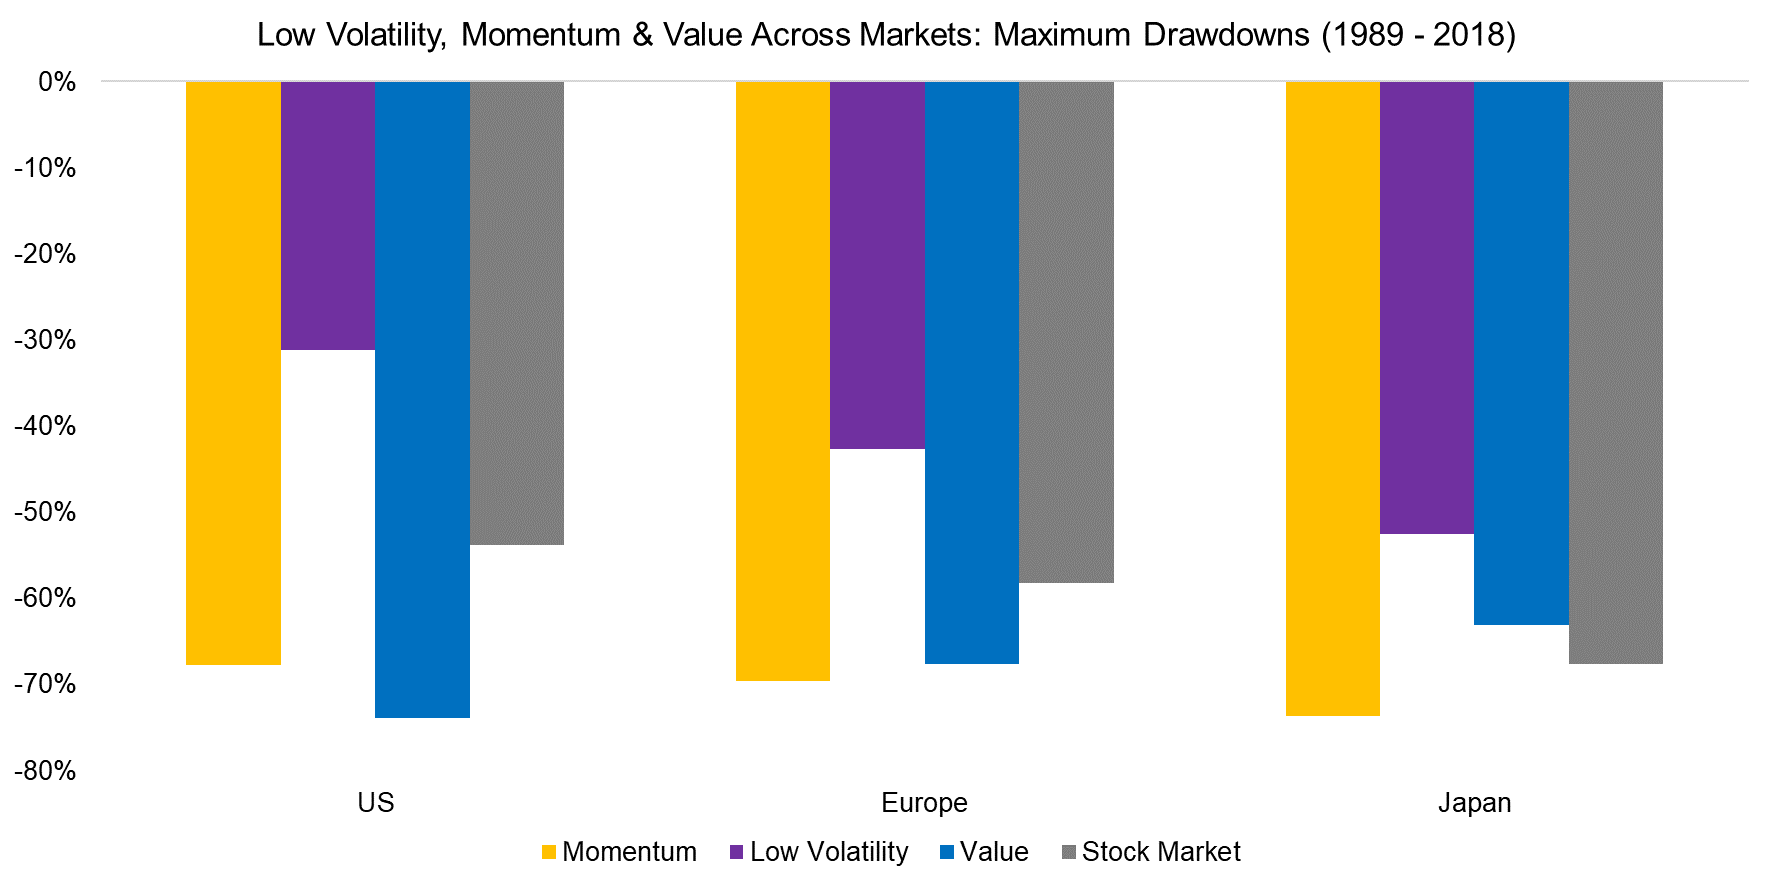 Low Volatility, Momentum & Value Across Markets Maximum Drawdowns (1989 - 2018)